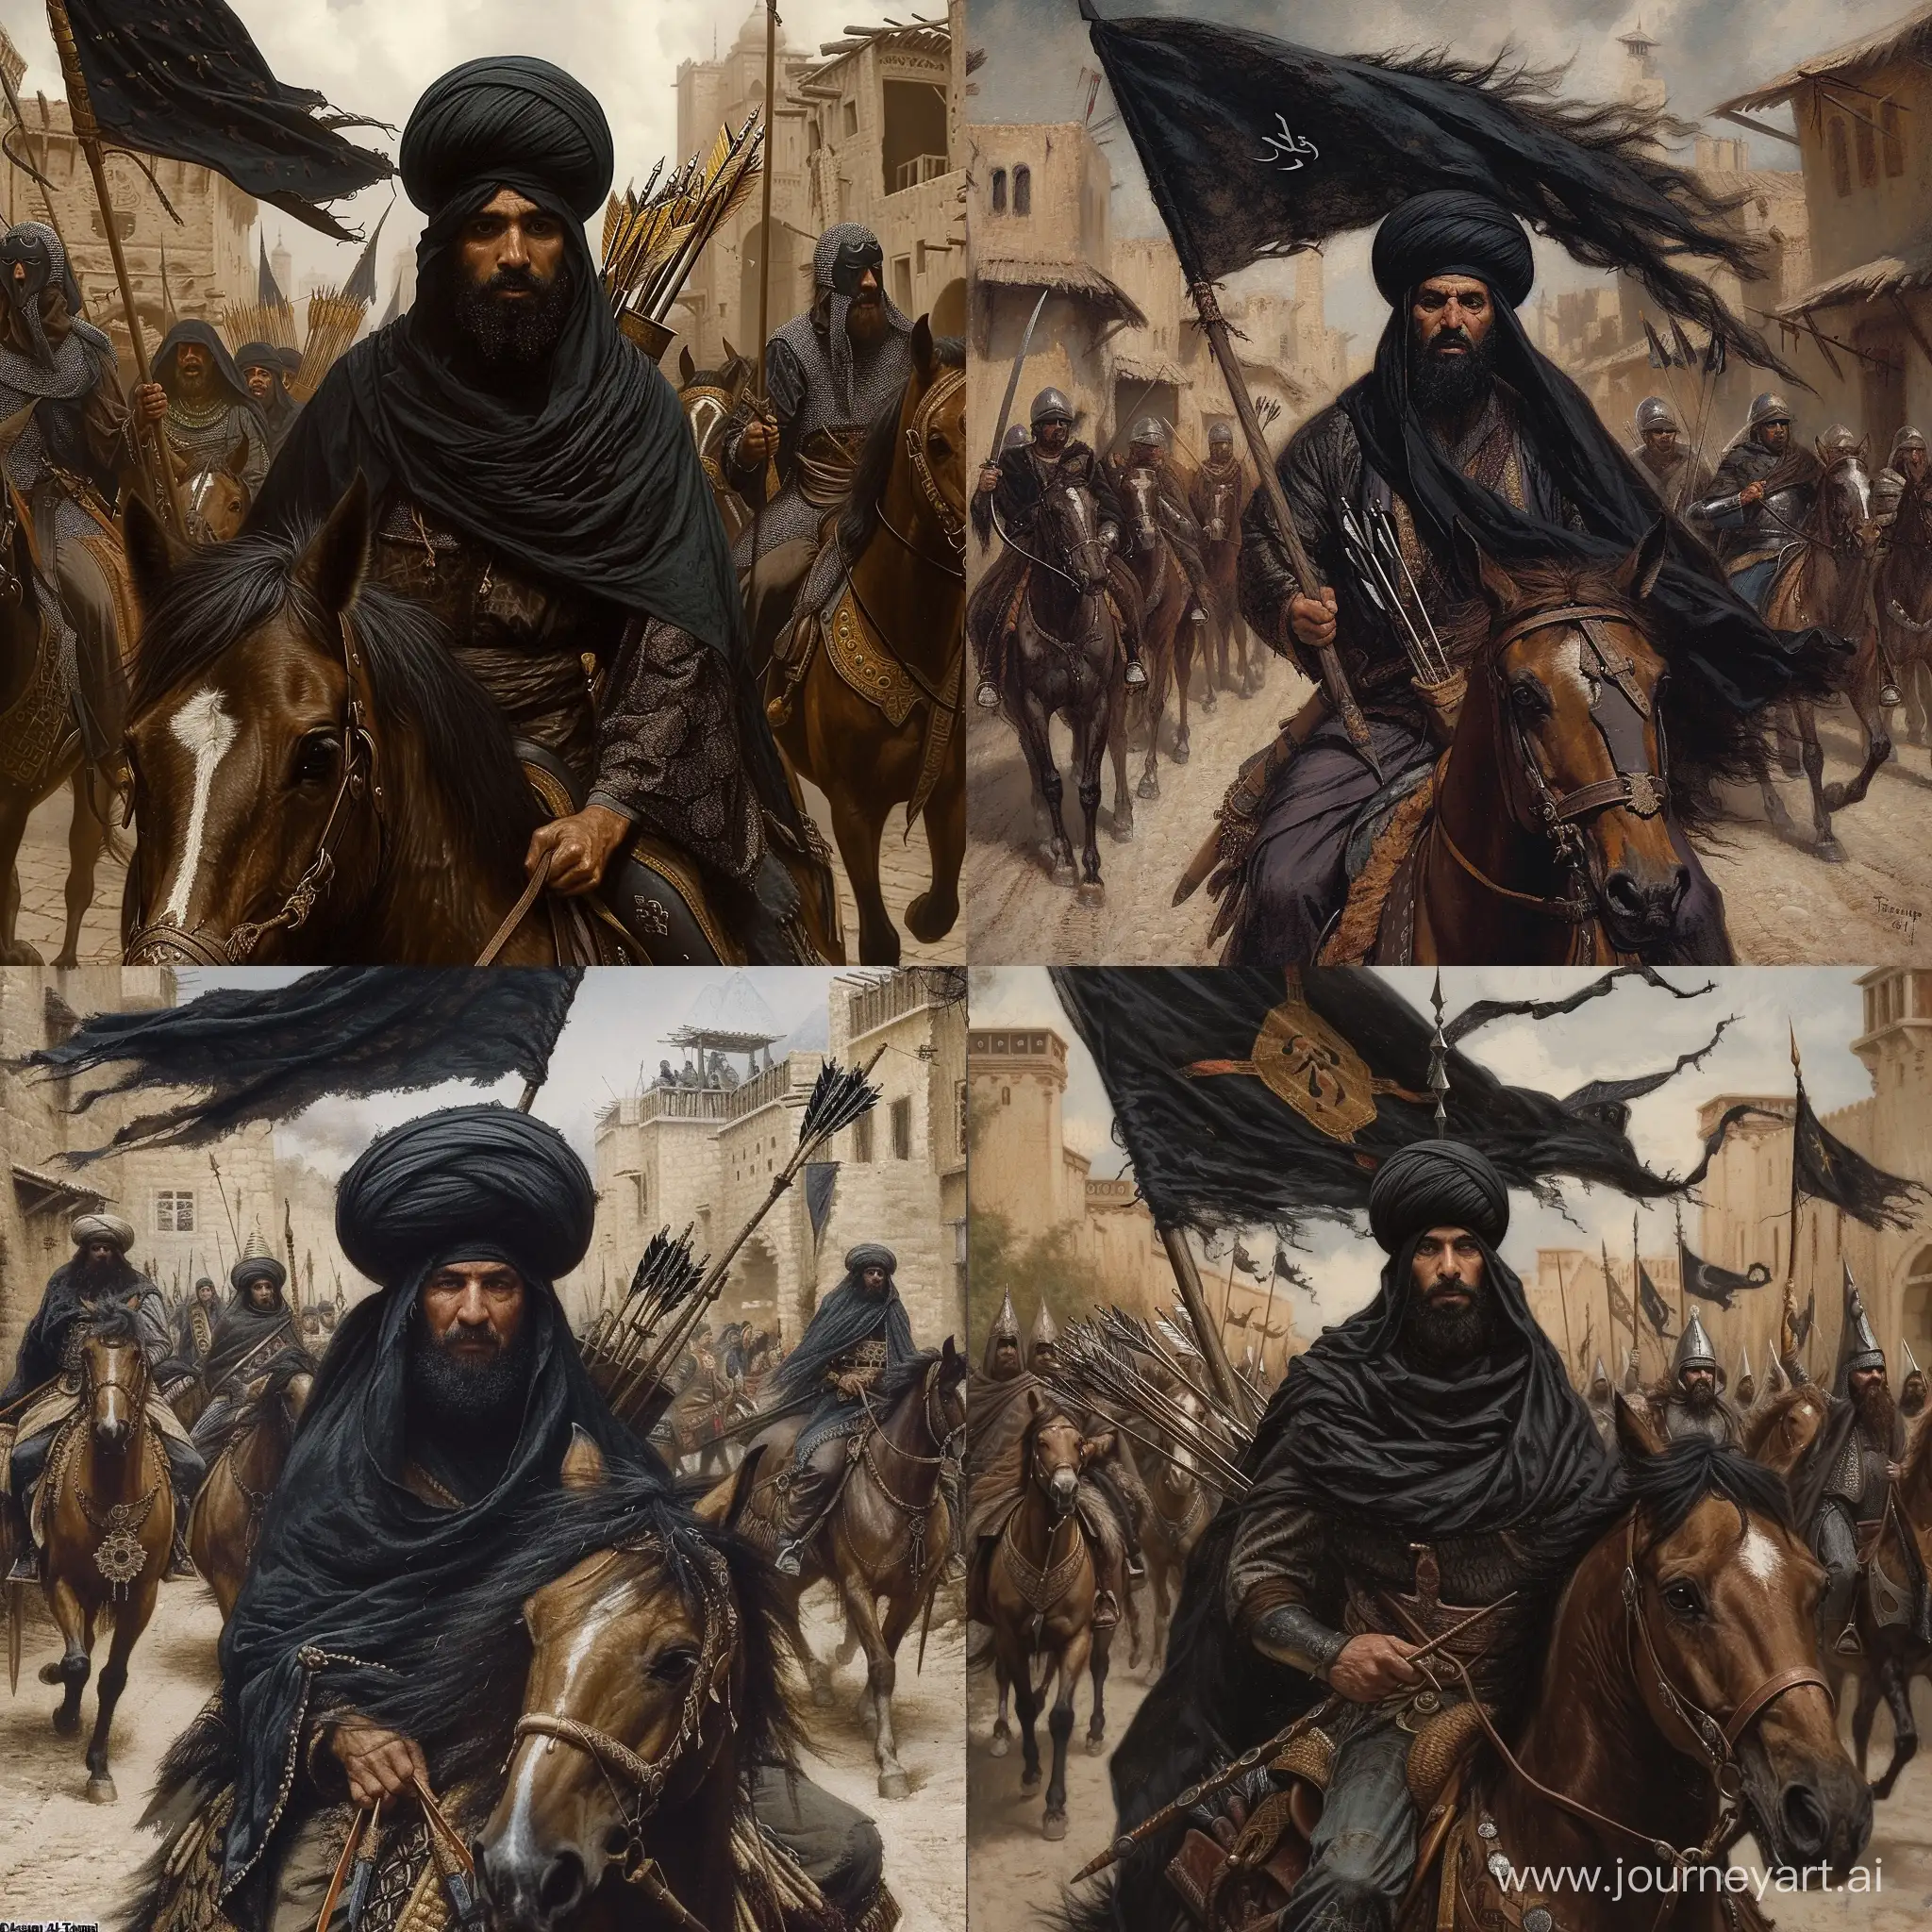 Sheikh-Hassan-AlTahami-Leading-Knights-on-Horseback-Through-Village